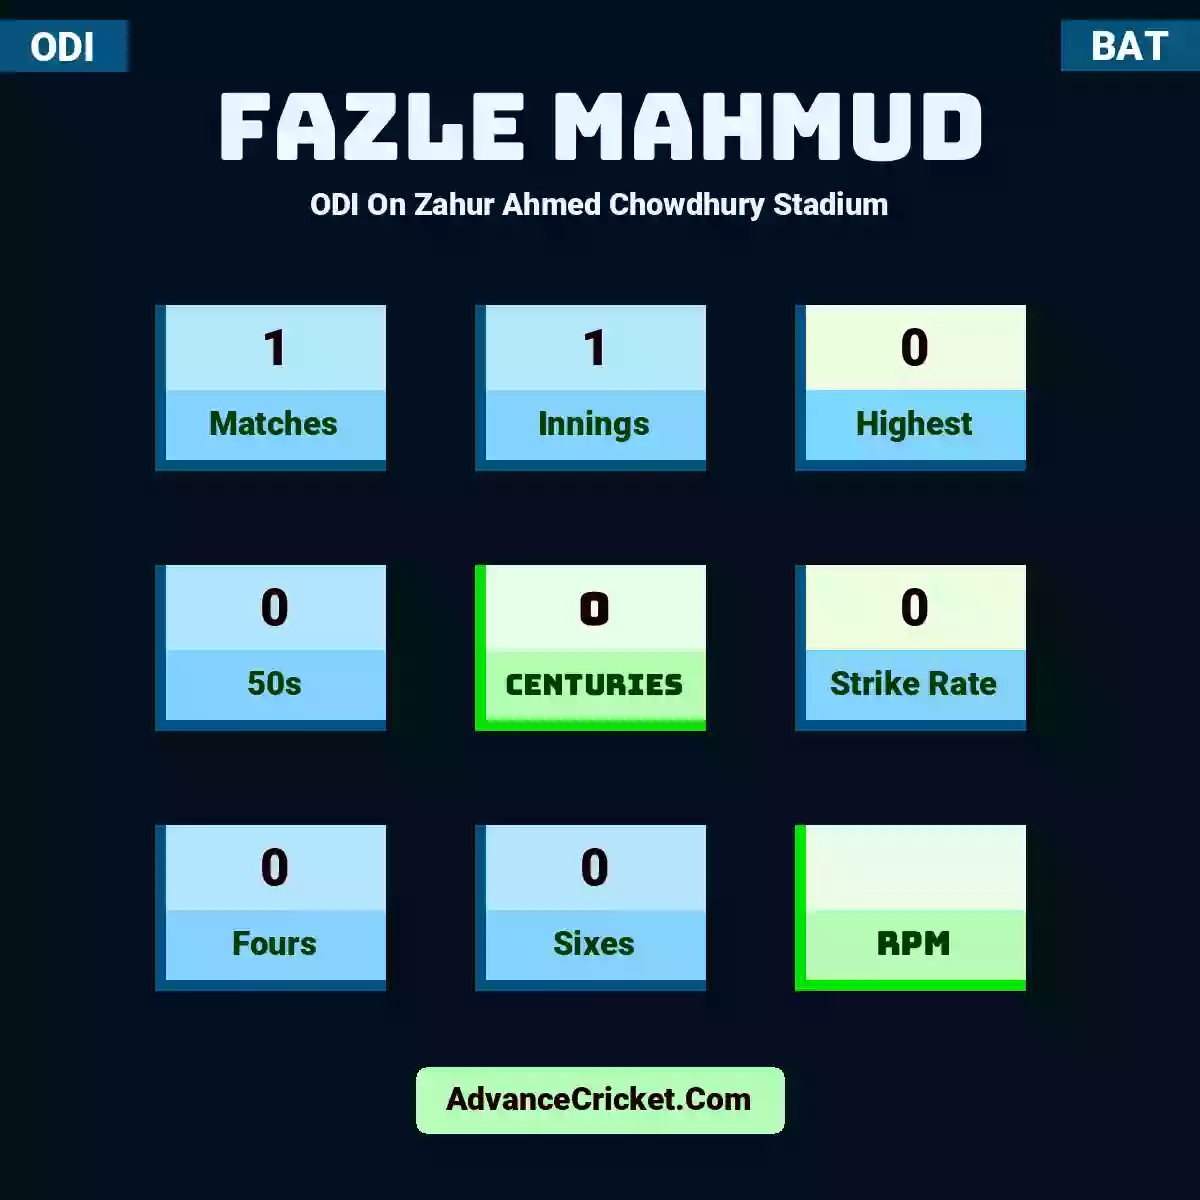 Fazle Mahmud ODI  On Zahur Ahmed Chowdhury Stadium, Fazle Mahmud played 1 matches, scored 0 runs as highest, 0 half-centuries, and 0 centuries, with a strike rate of 0. F.Mahmud hit 0 fours and 0 sixes.